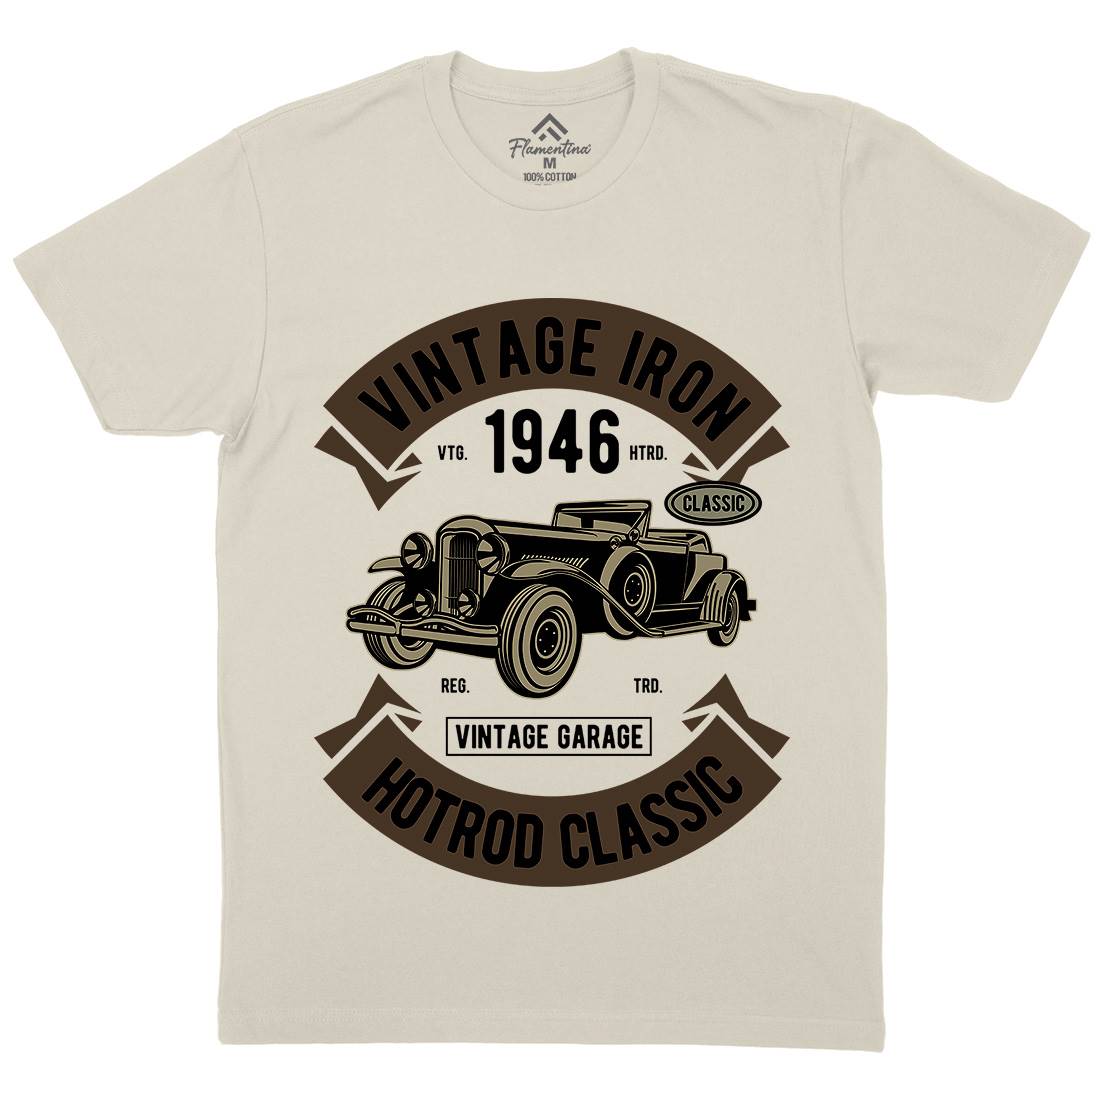 Vintage Iron Classic Mens Organic Crew Neck T-Shirt Cars D595